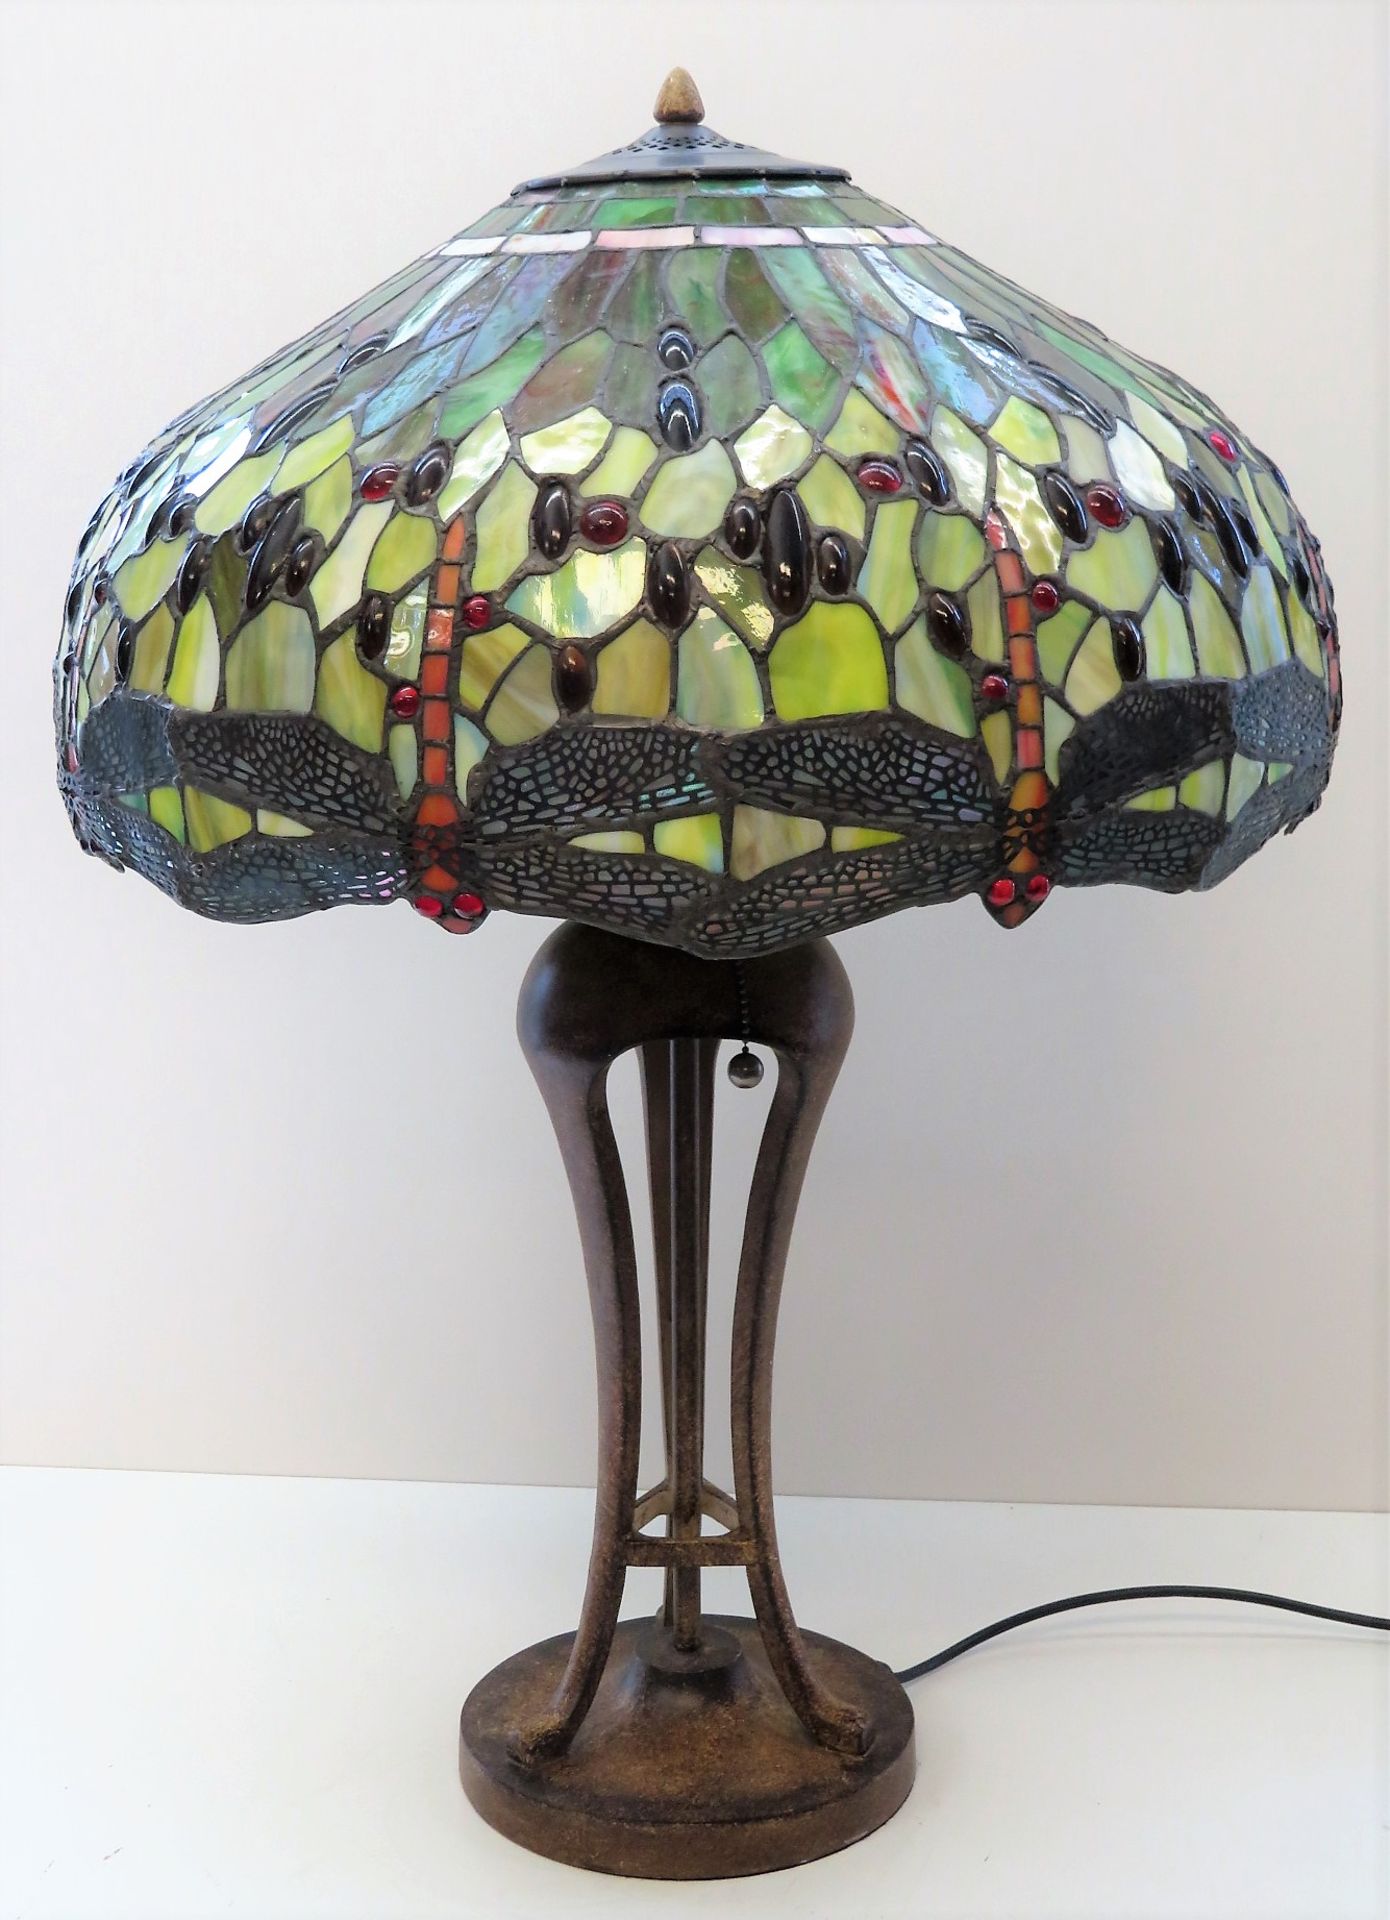 Tischlampe, Tiffany-Stil, Dragonfly, 2-flammig, farbige Bleiverglasung, bemalter Metallstandfuß, h 